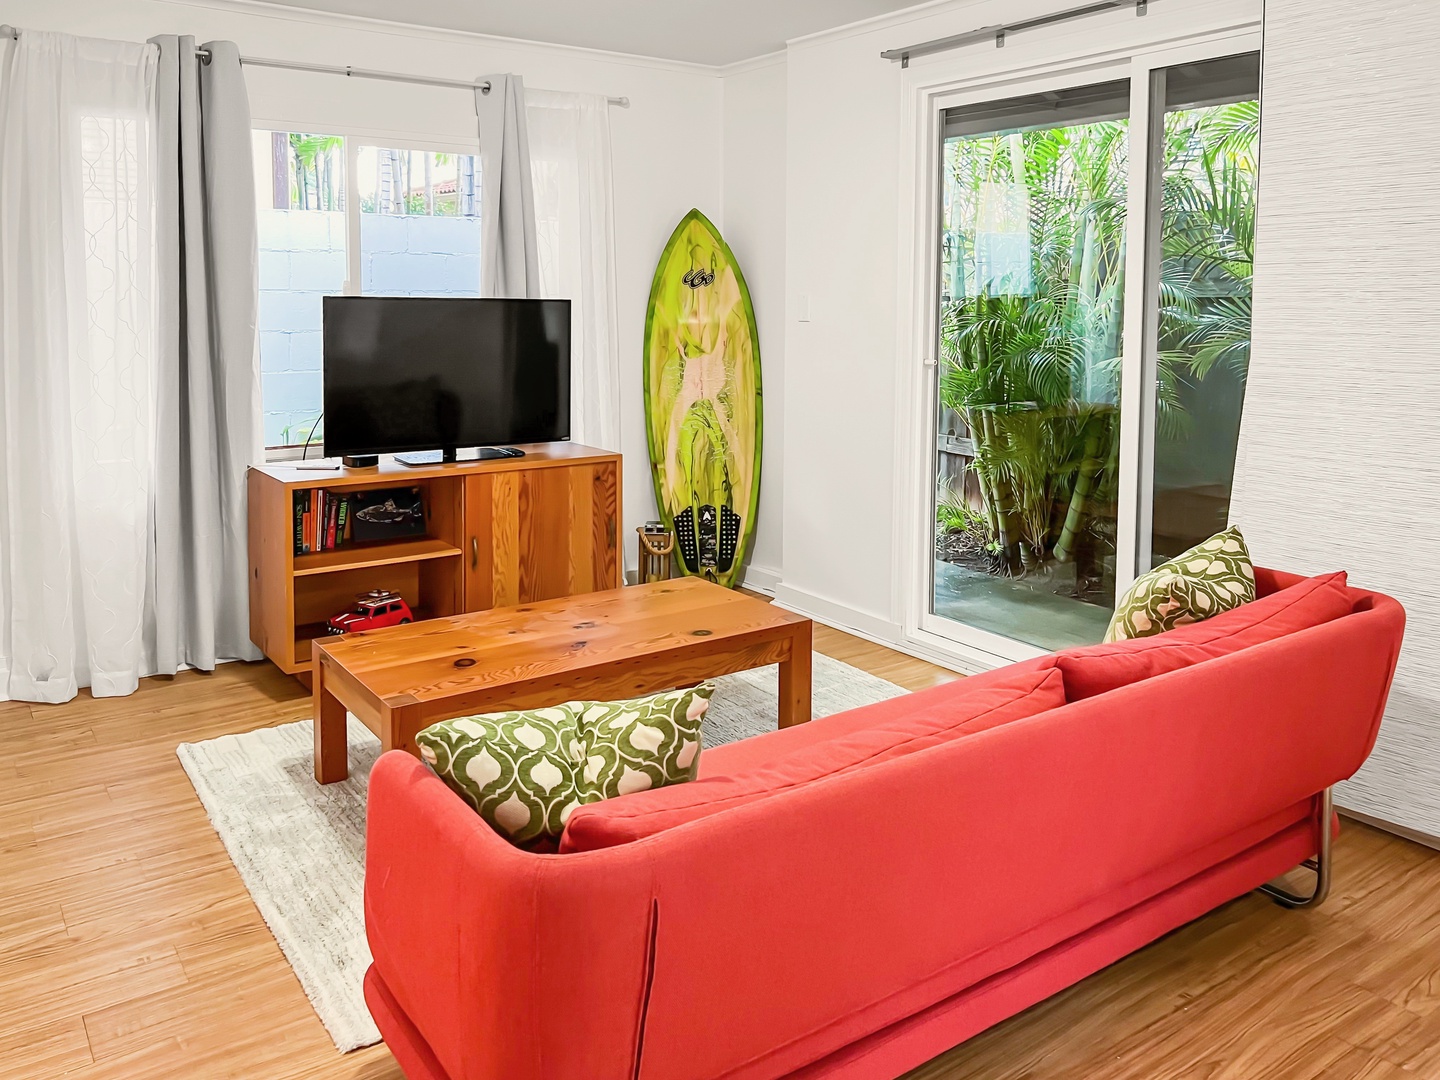 Honolulu Vacation Rentals, Ho'okipa Villa - Guest cottage living room with sleeper sofa